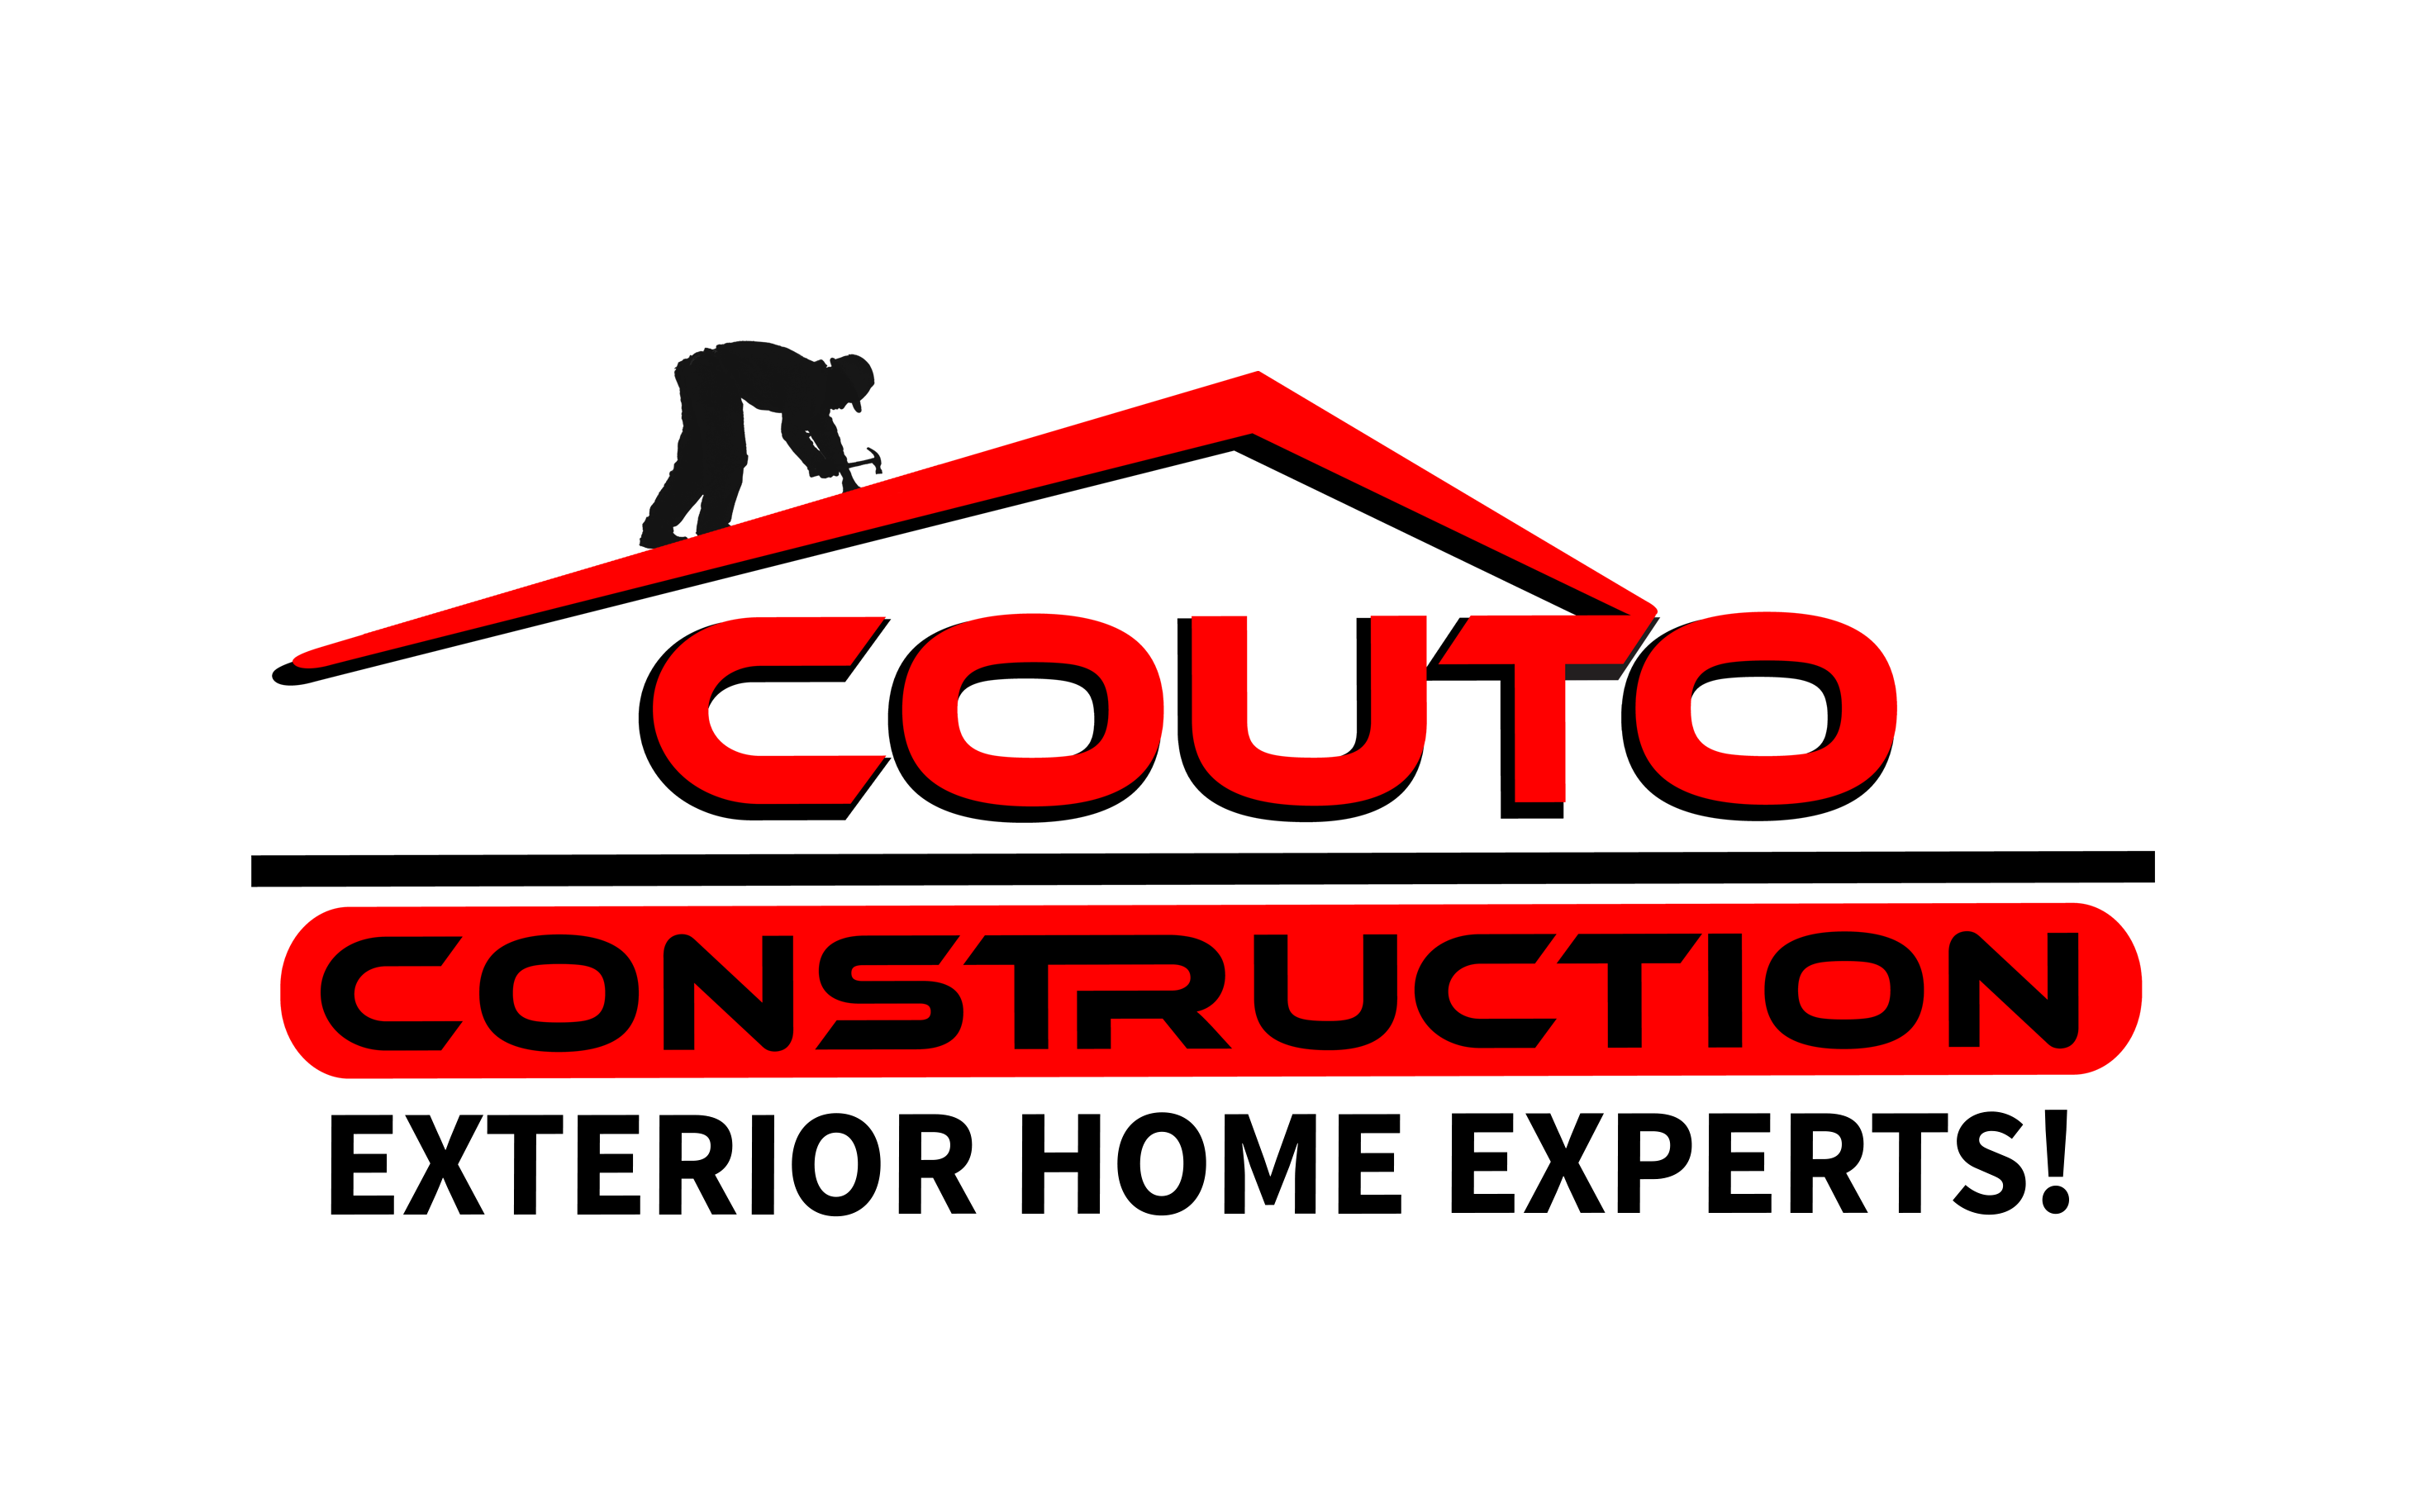 Couto Construction, Inc. Logo